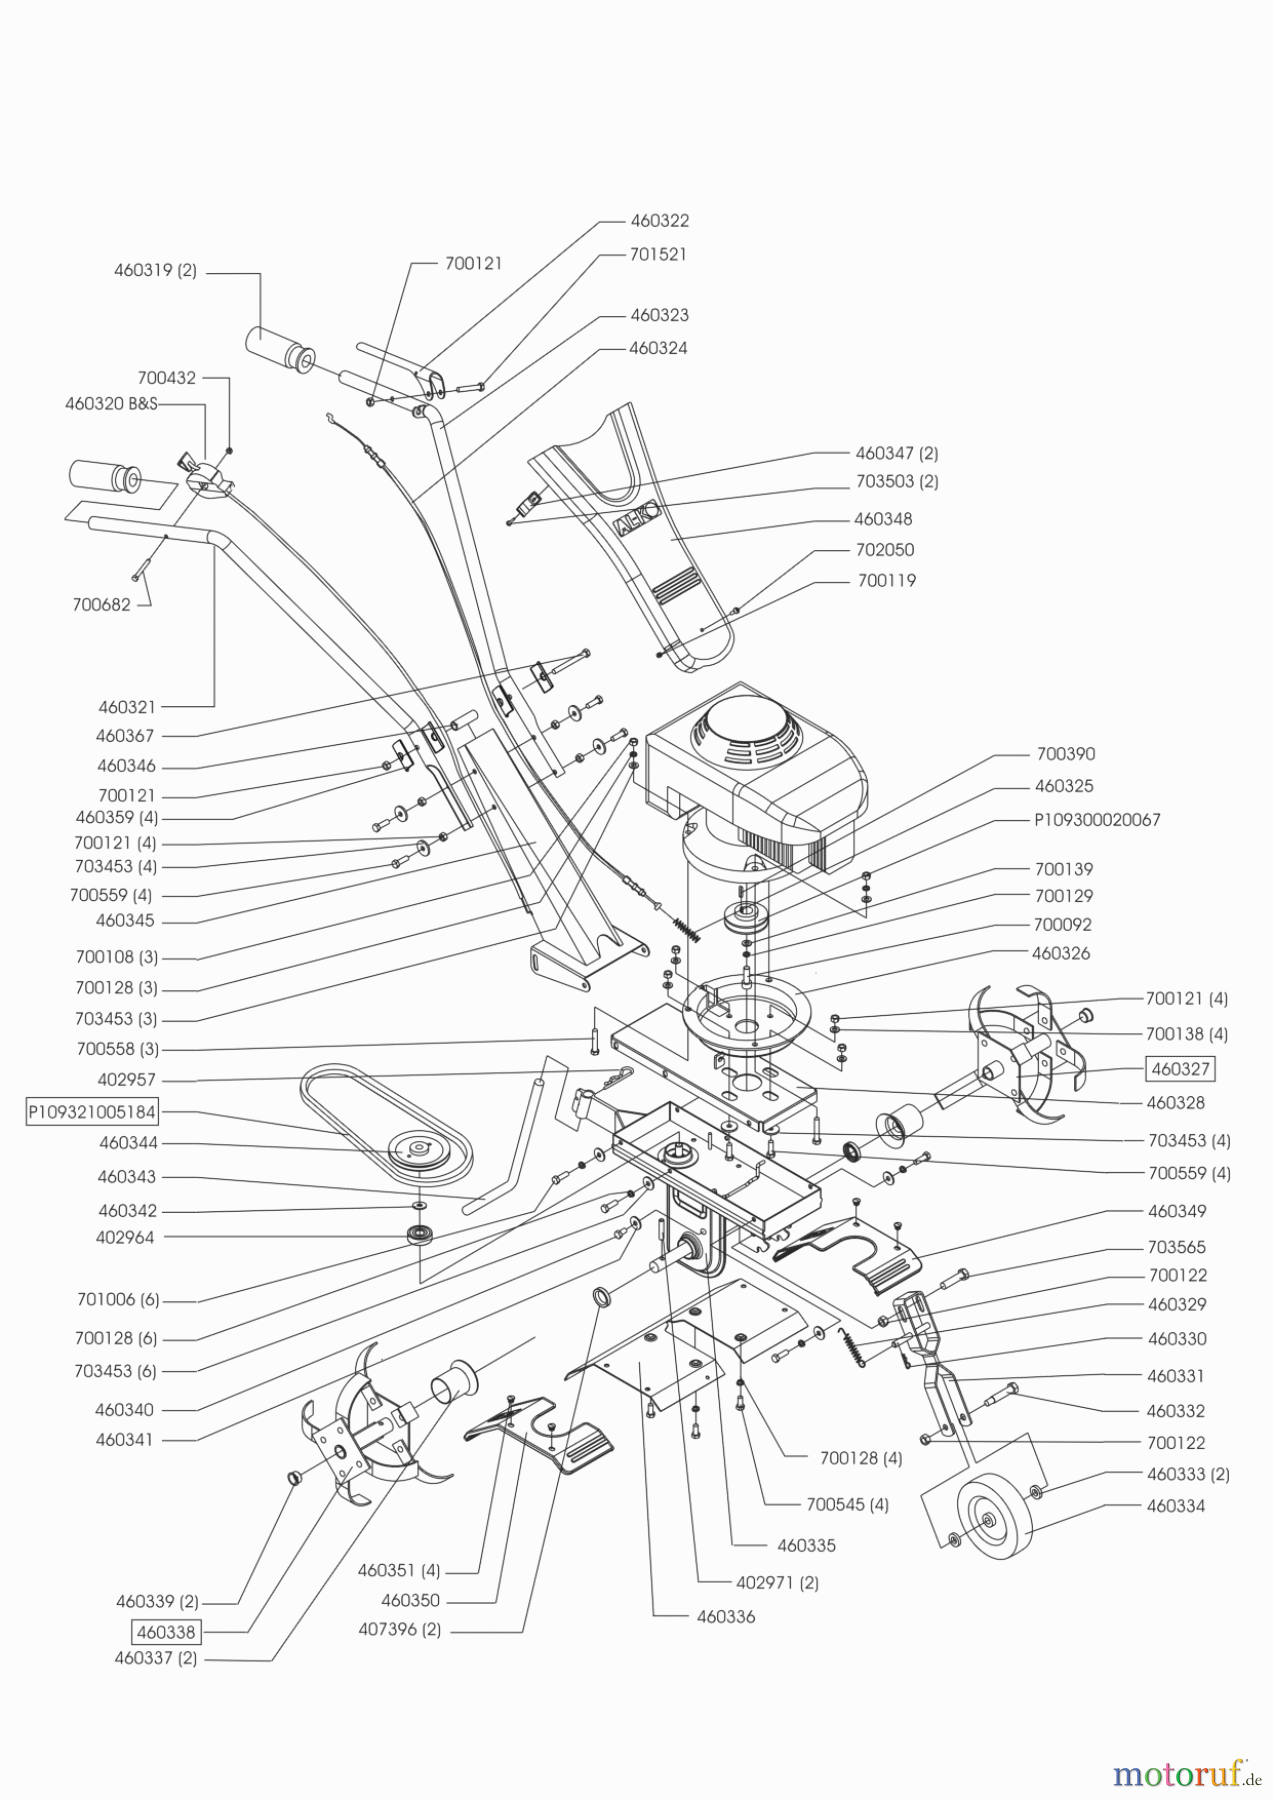  AL-KO Gartentechnik Motorhacken MH 370-4 Seite 1